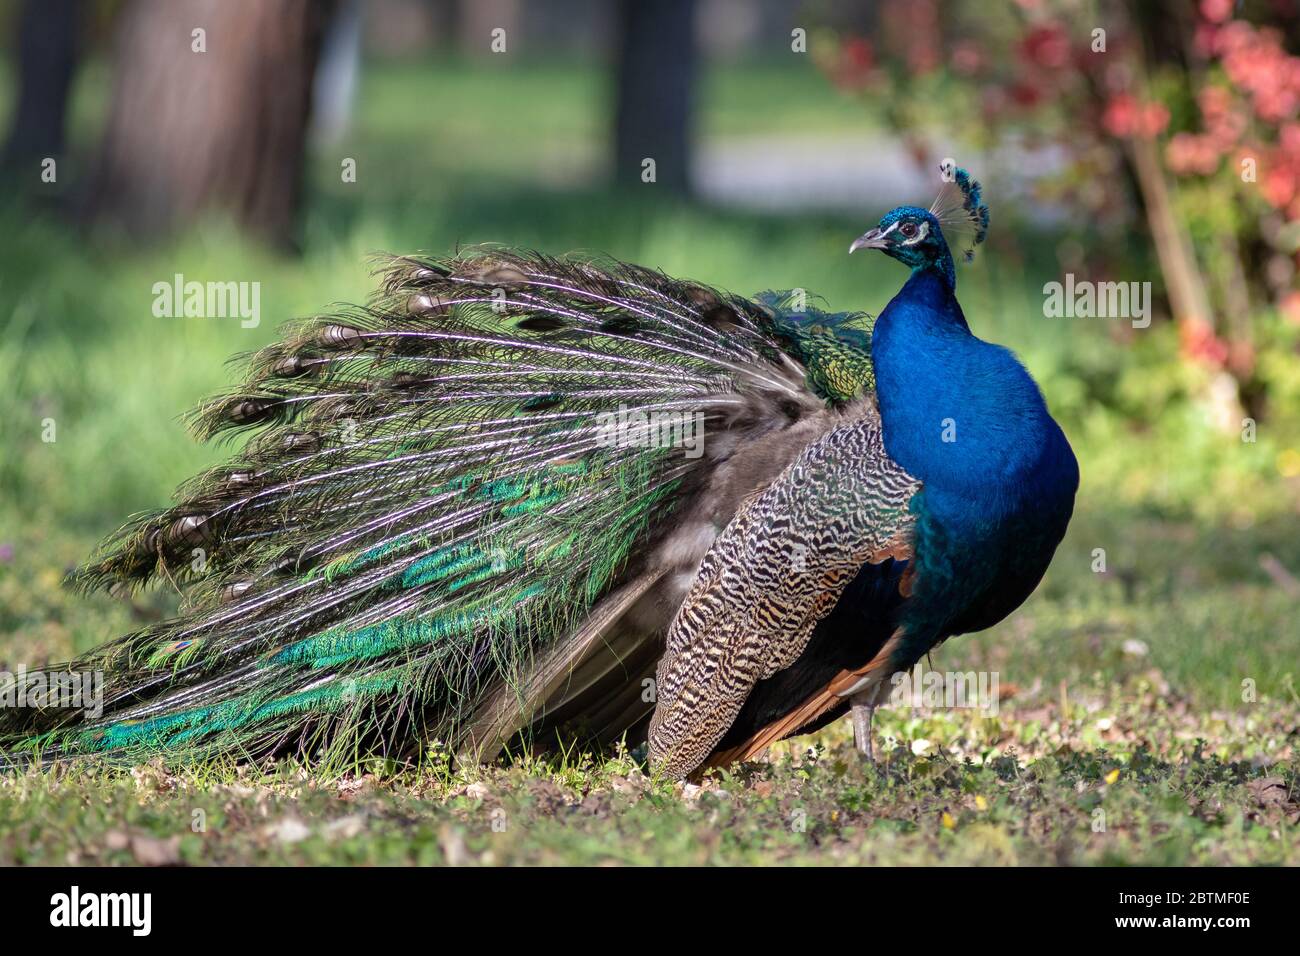 Beautiful colorful bird photo Stock Photo